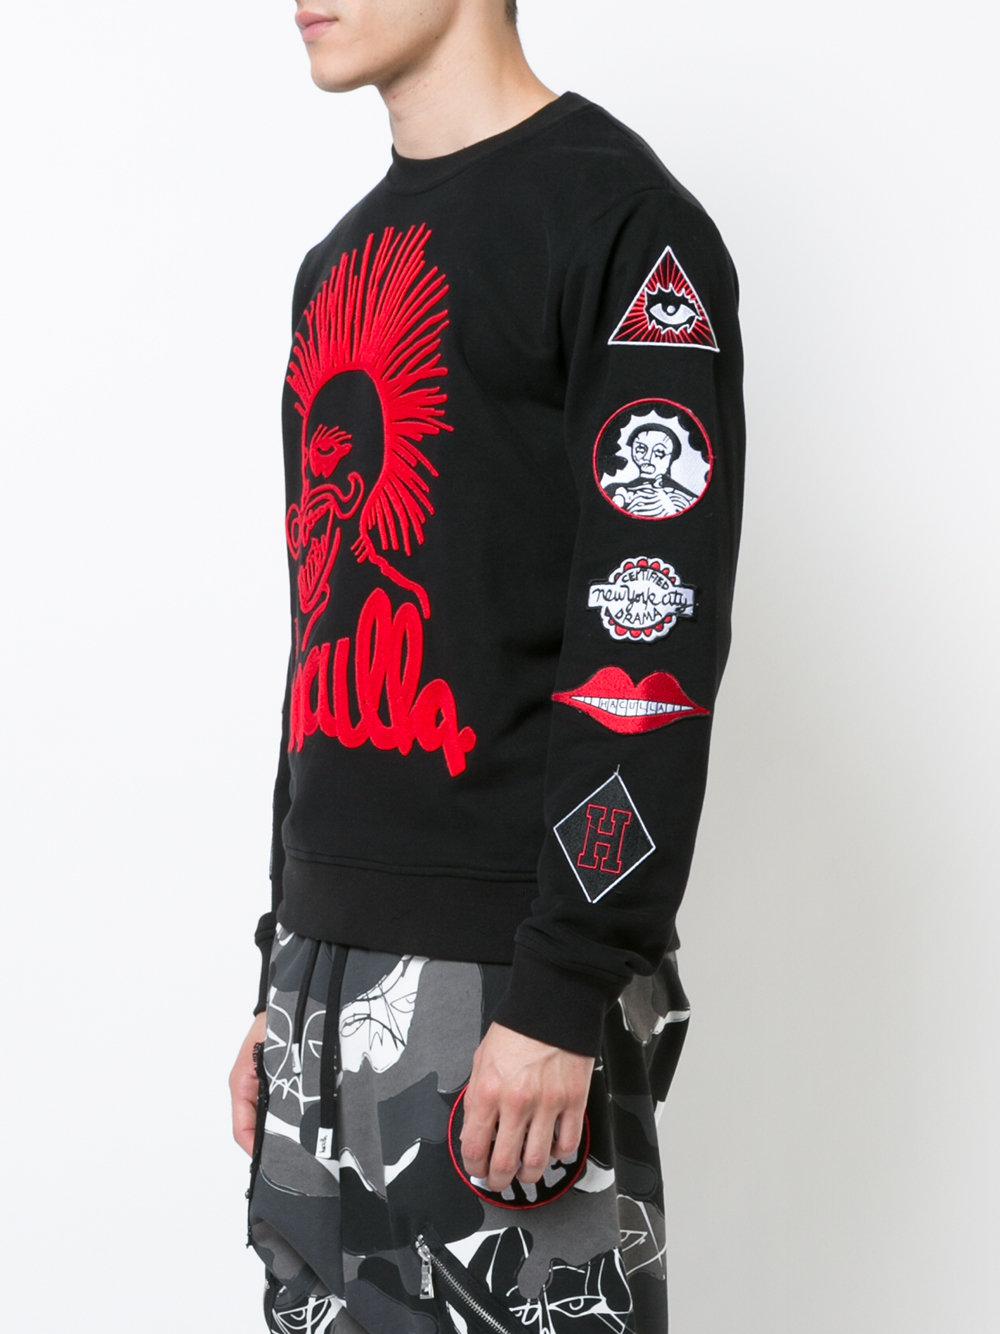 Haculla Cotton Patch Print Sweatshirt in Black for Men - Lyst